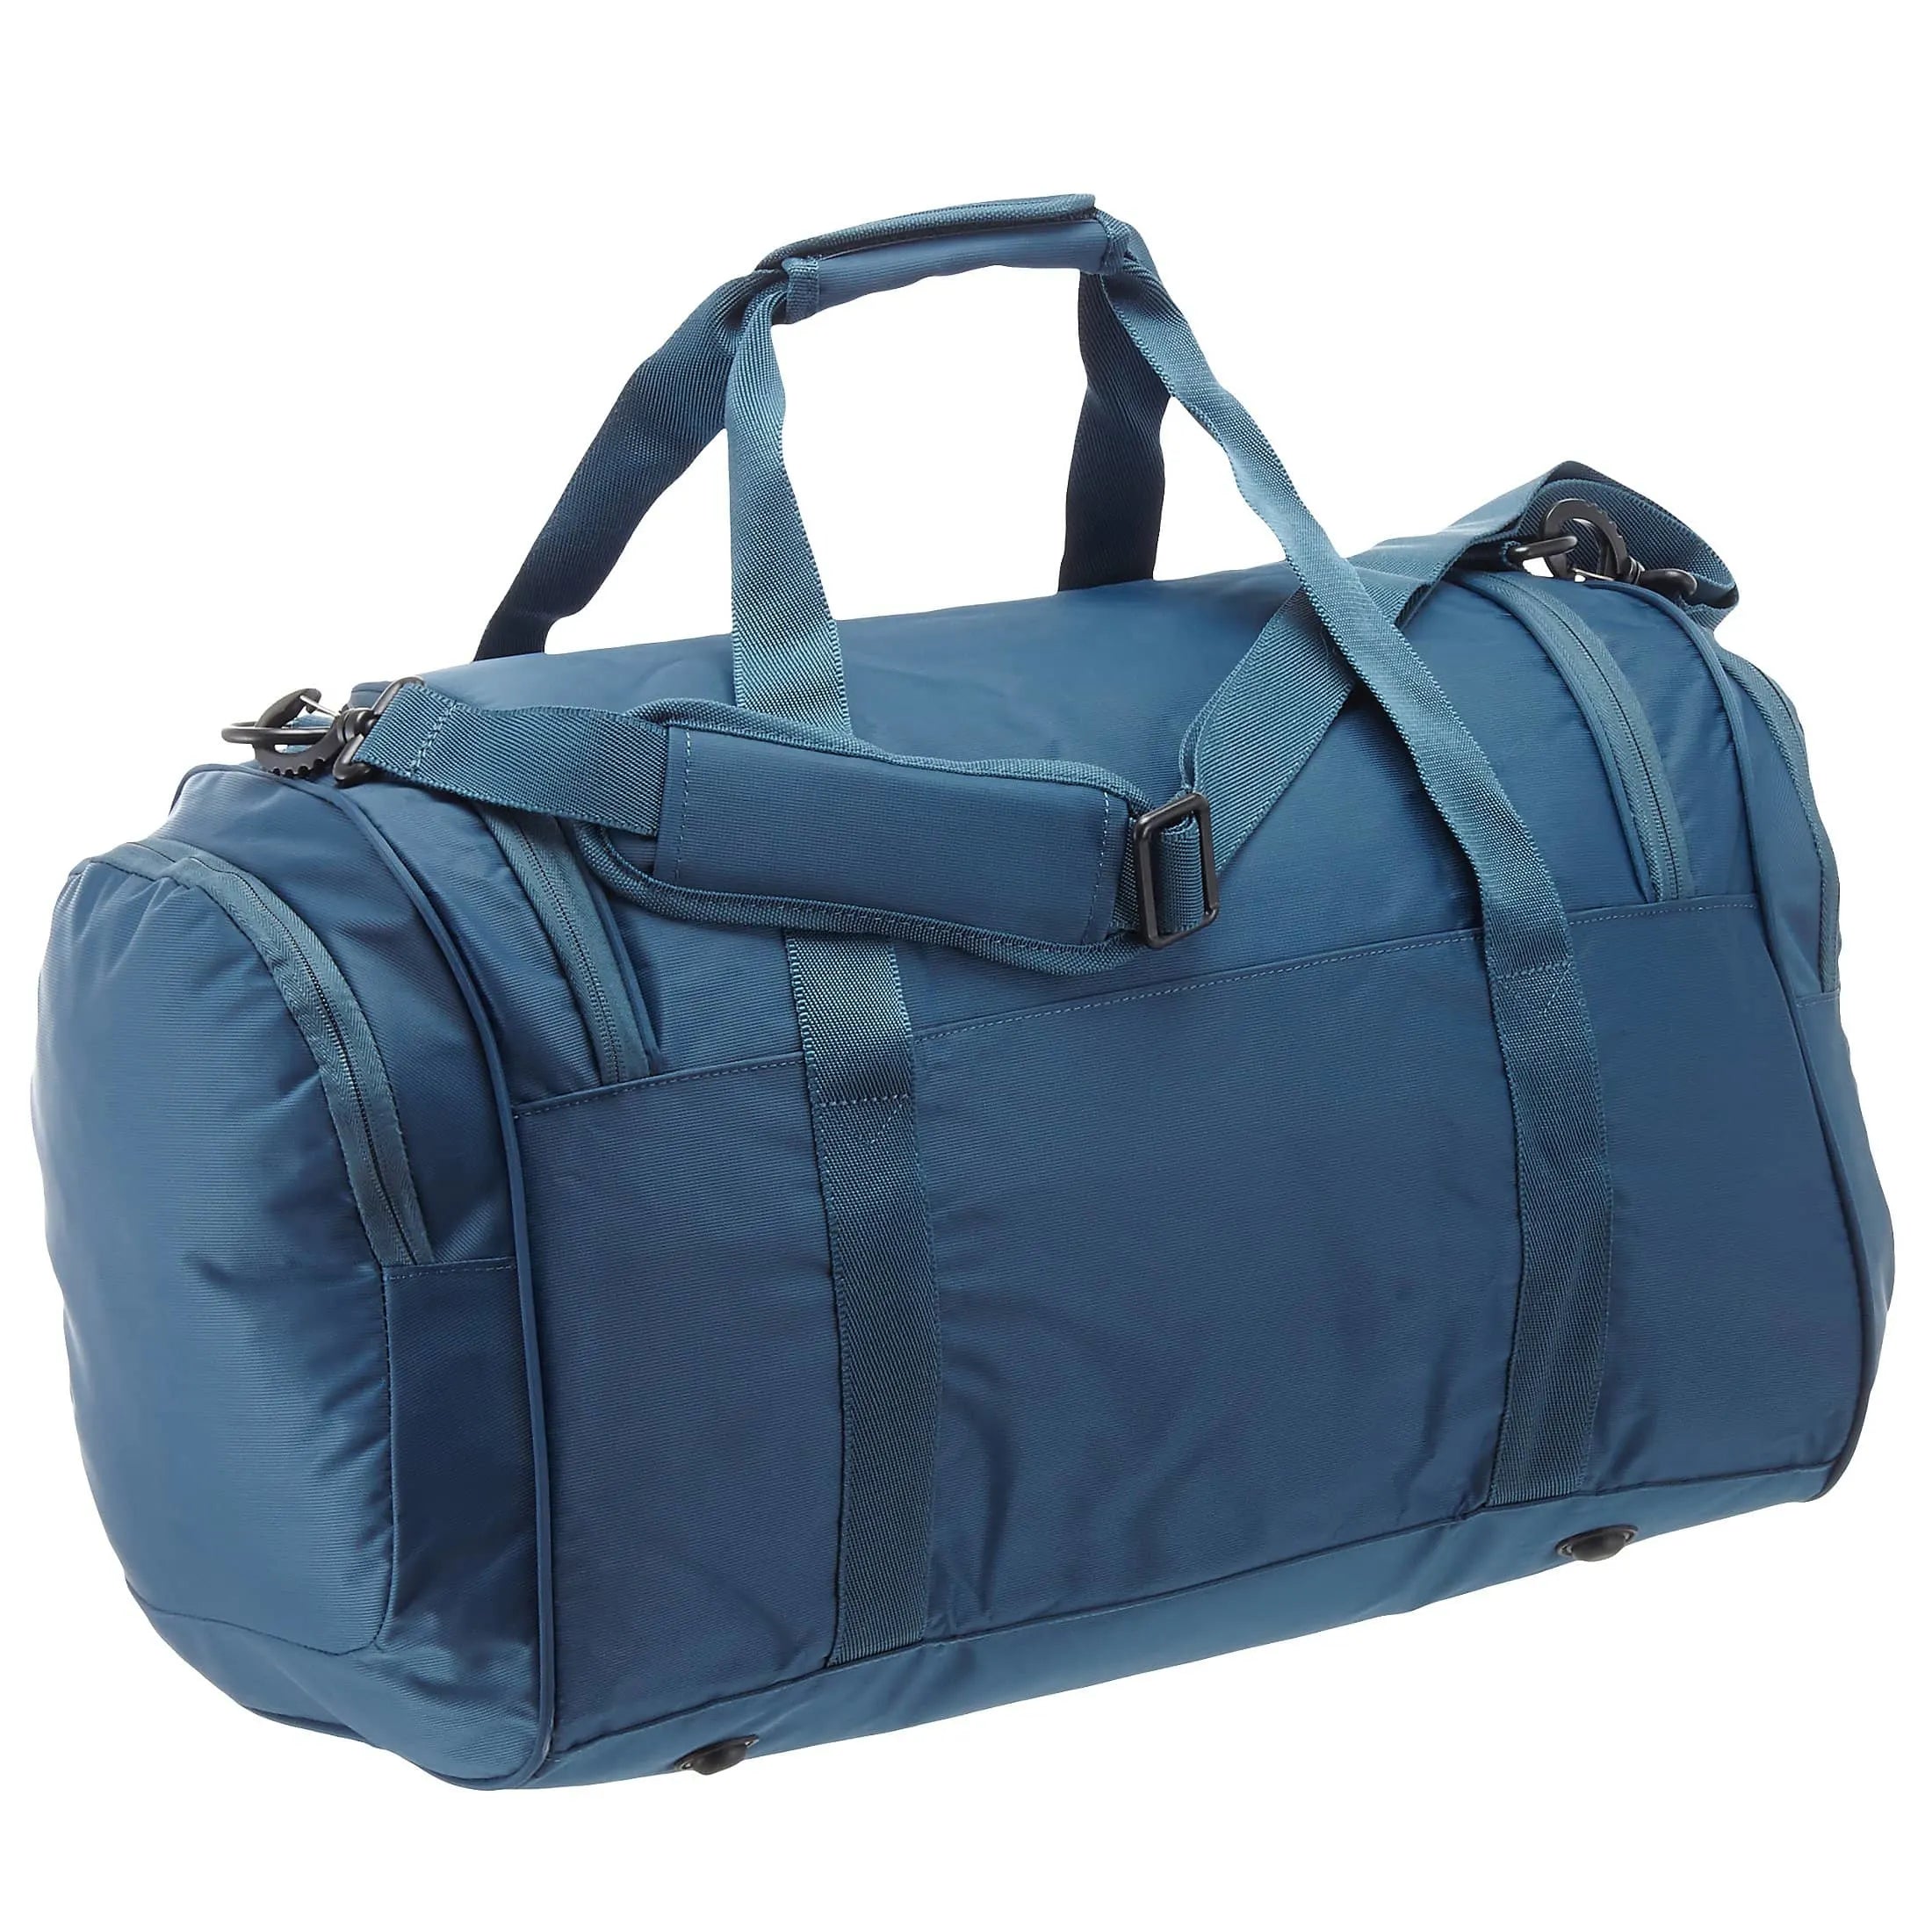 Roncato Speed travel bag 55 cm - blue